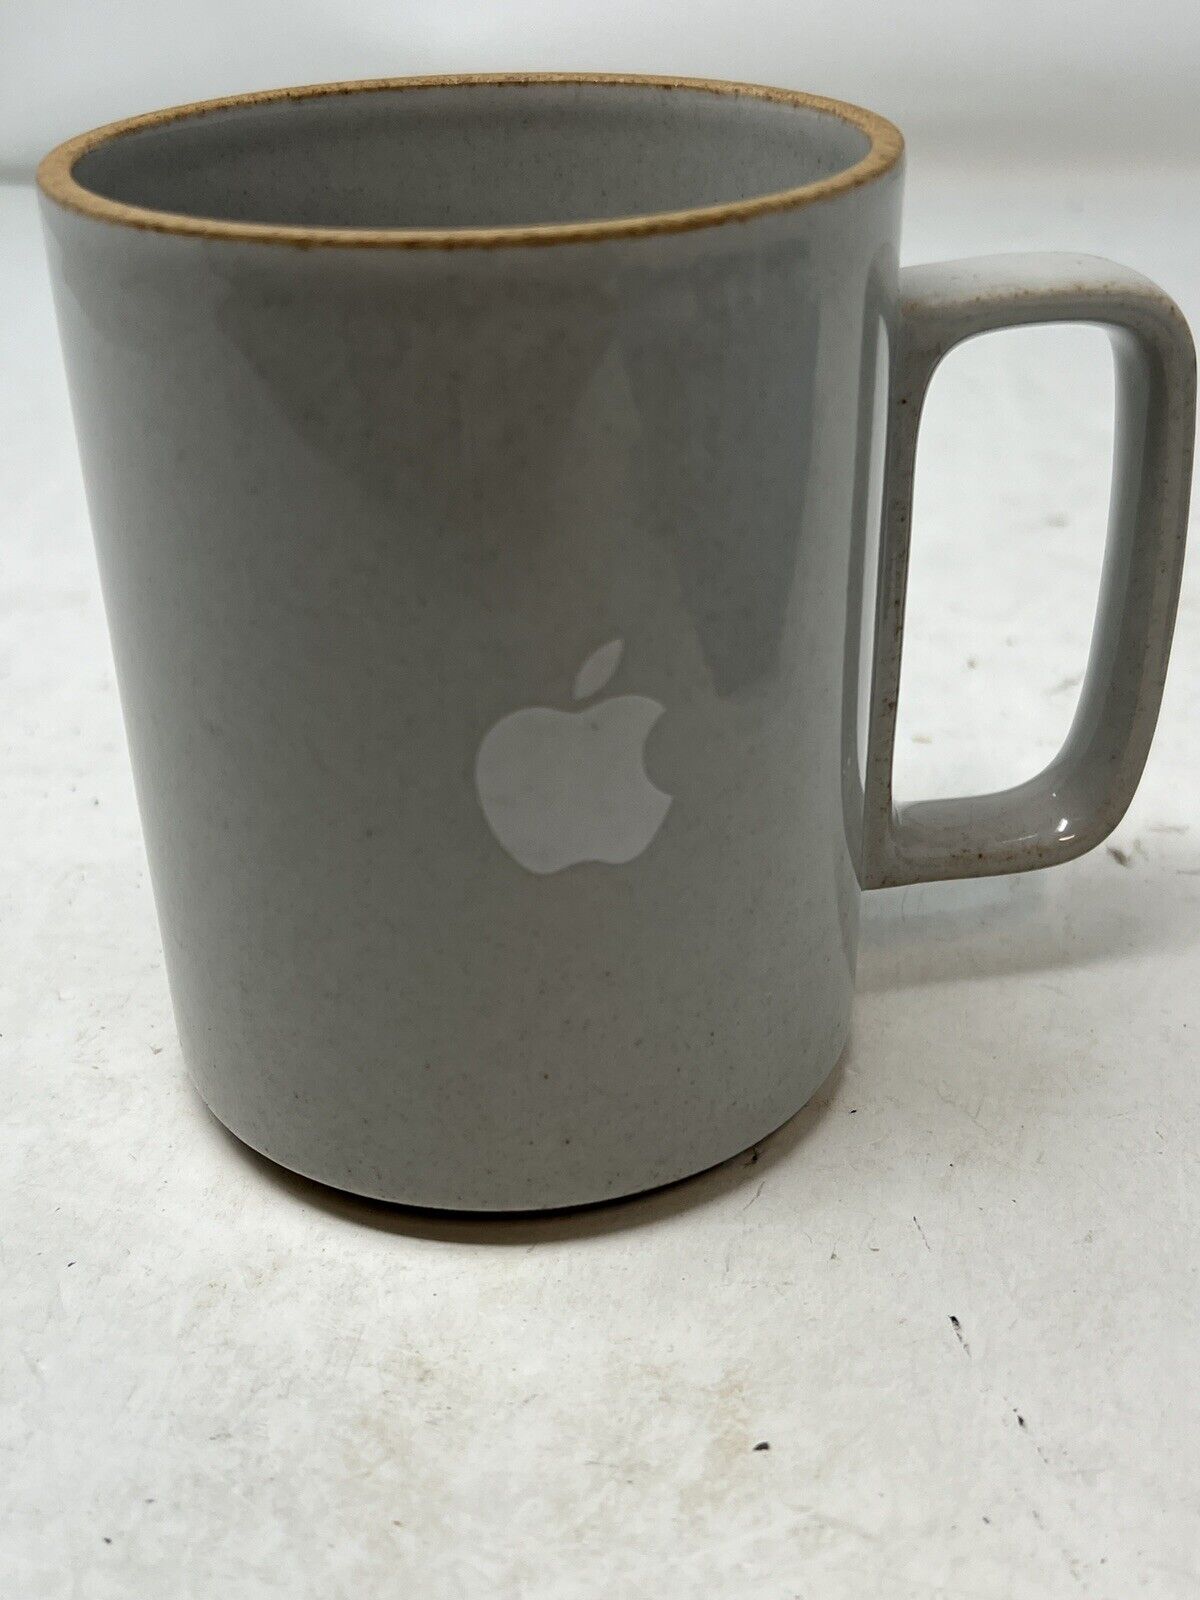 Hasami Apple Infinite Loop Visitor Coffee Mug Made in Japan 12 fl oz